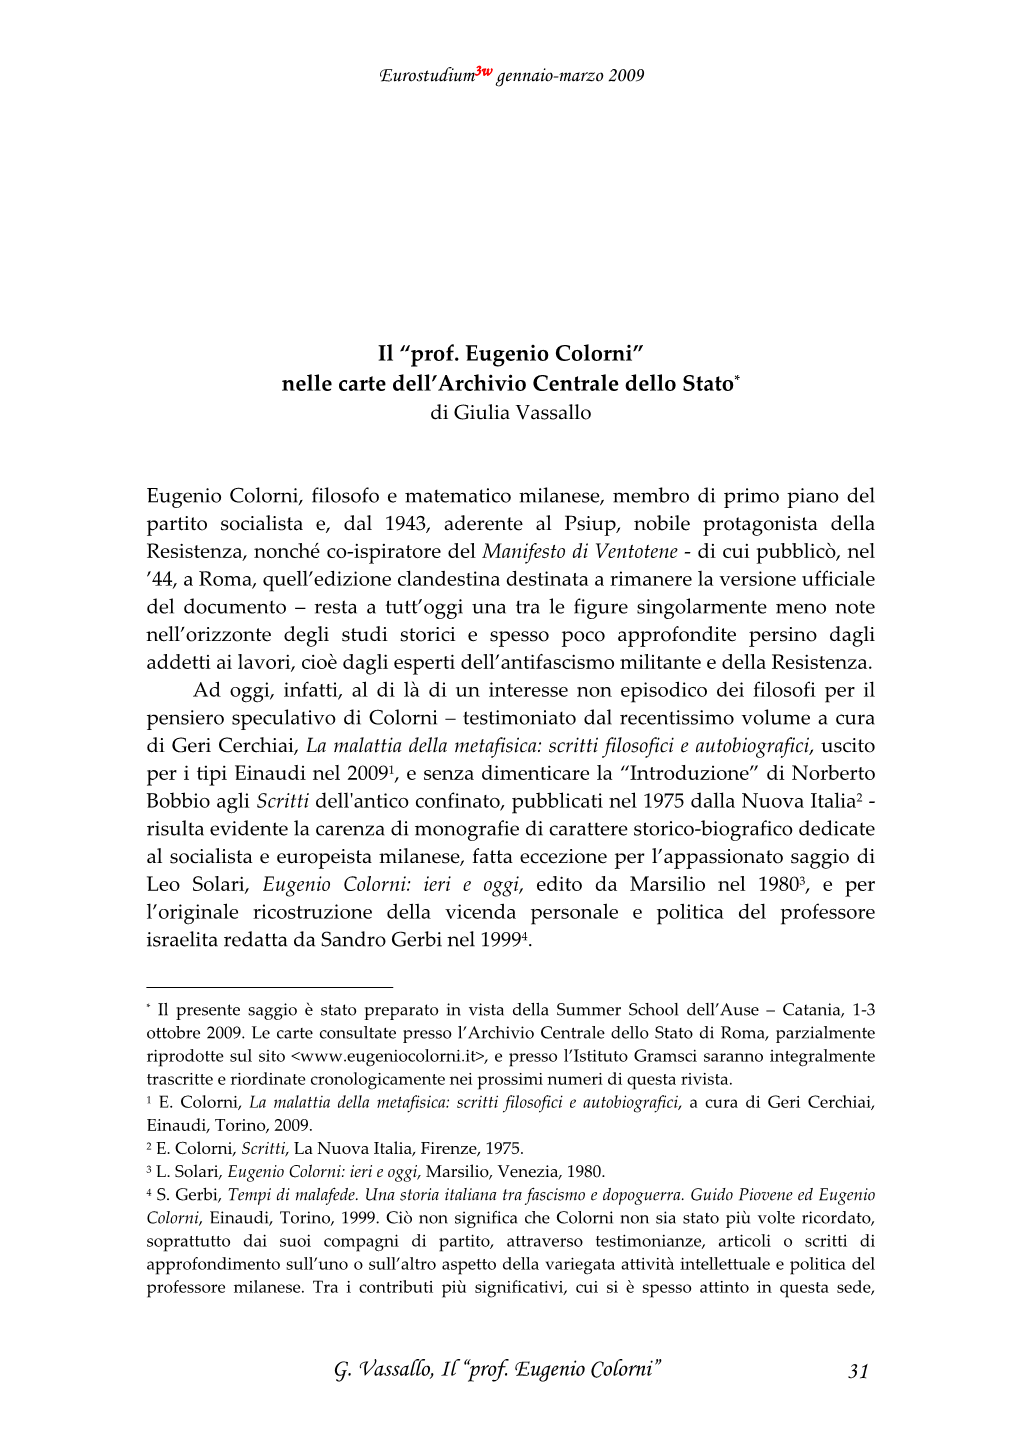 G. Vassallo, Il “Prof. Eugenio Colorni” 31 Eurostudium3w Gennaio-Marzo 2009